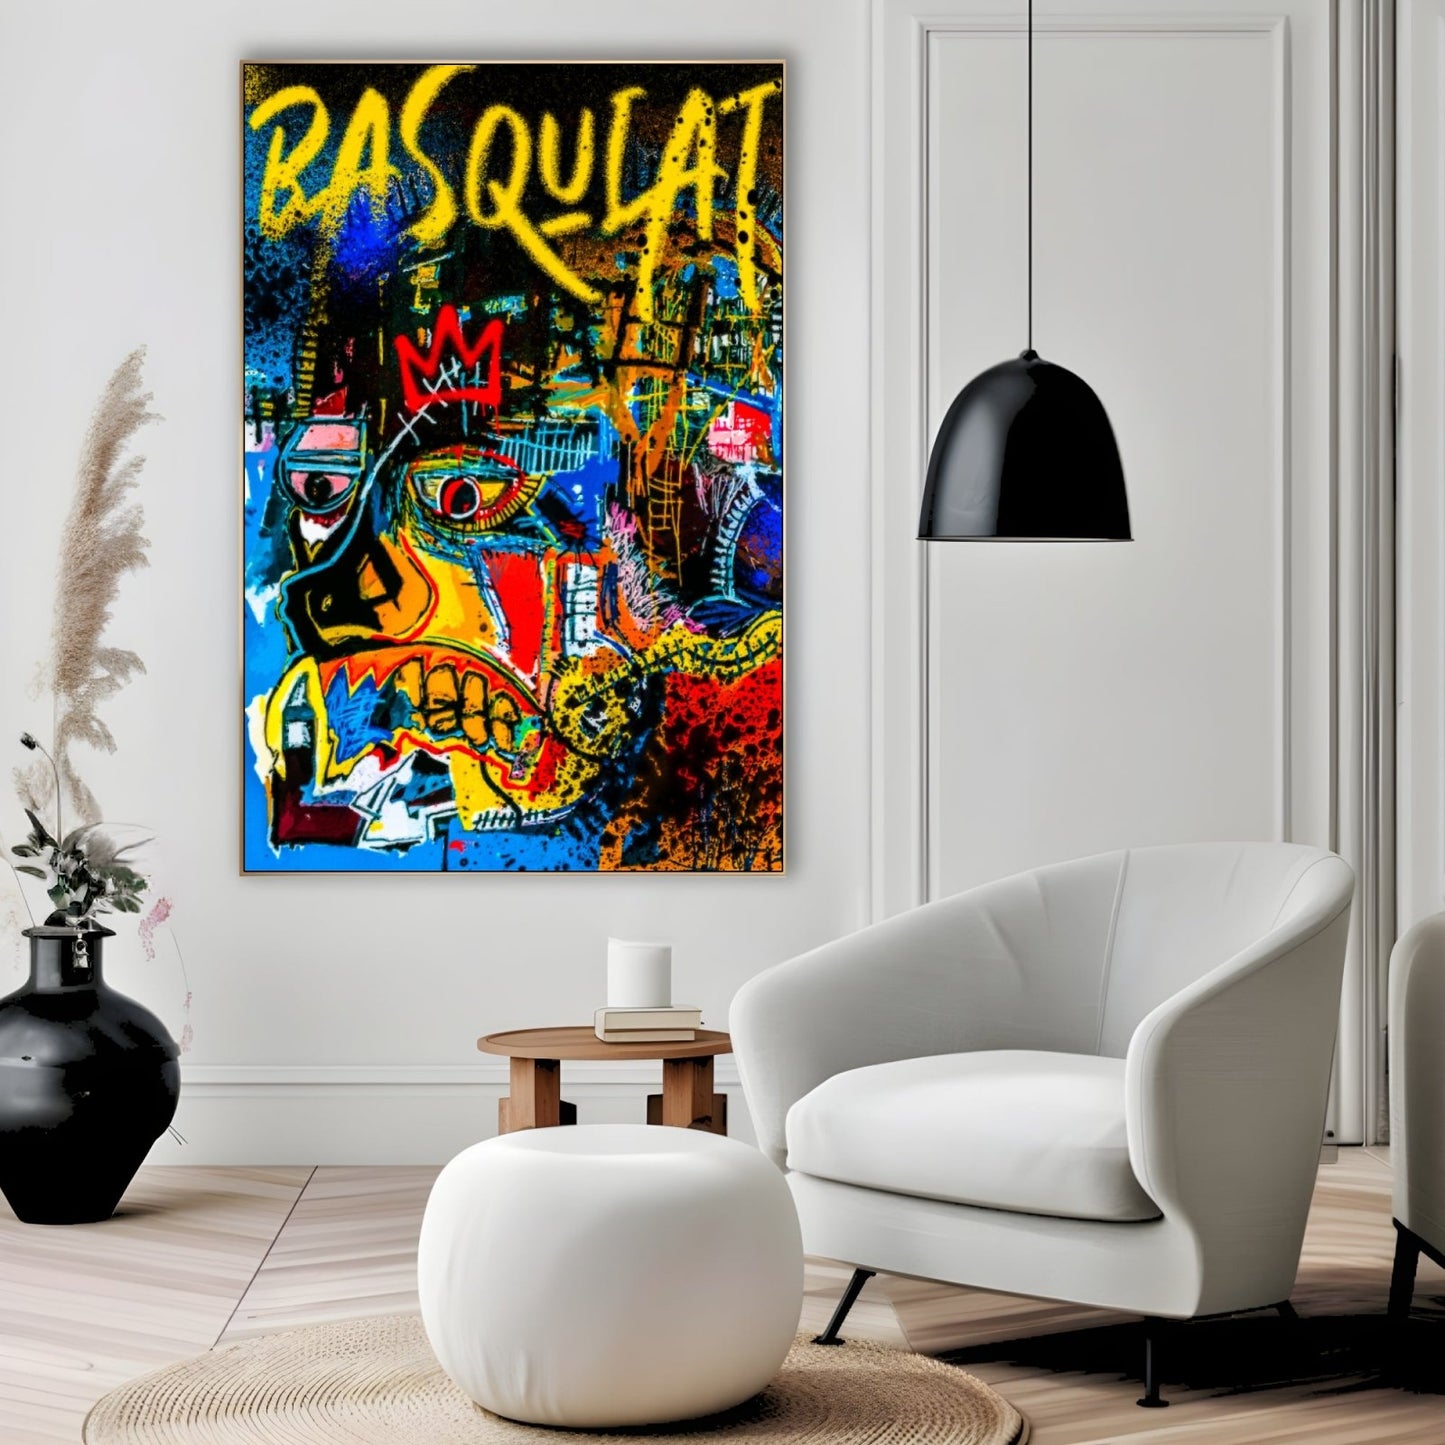 Sztuka ścienna na płótnie Basquiata